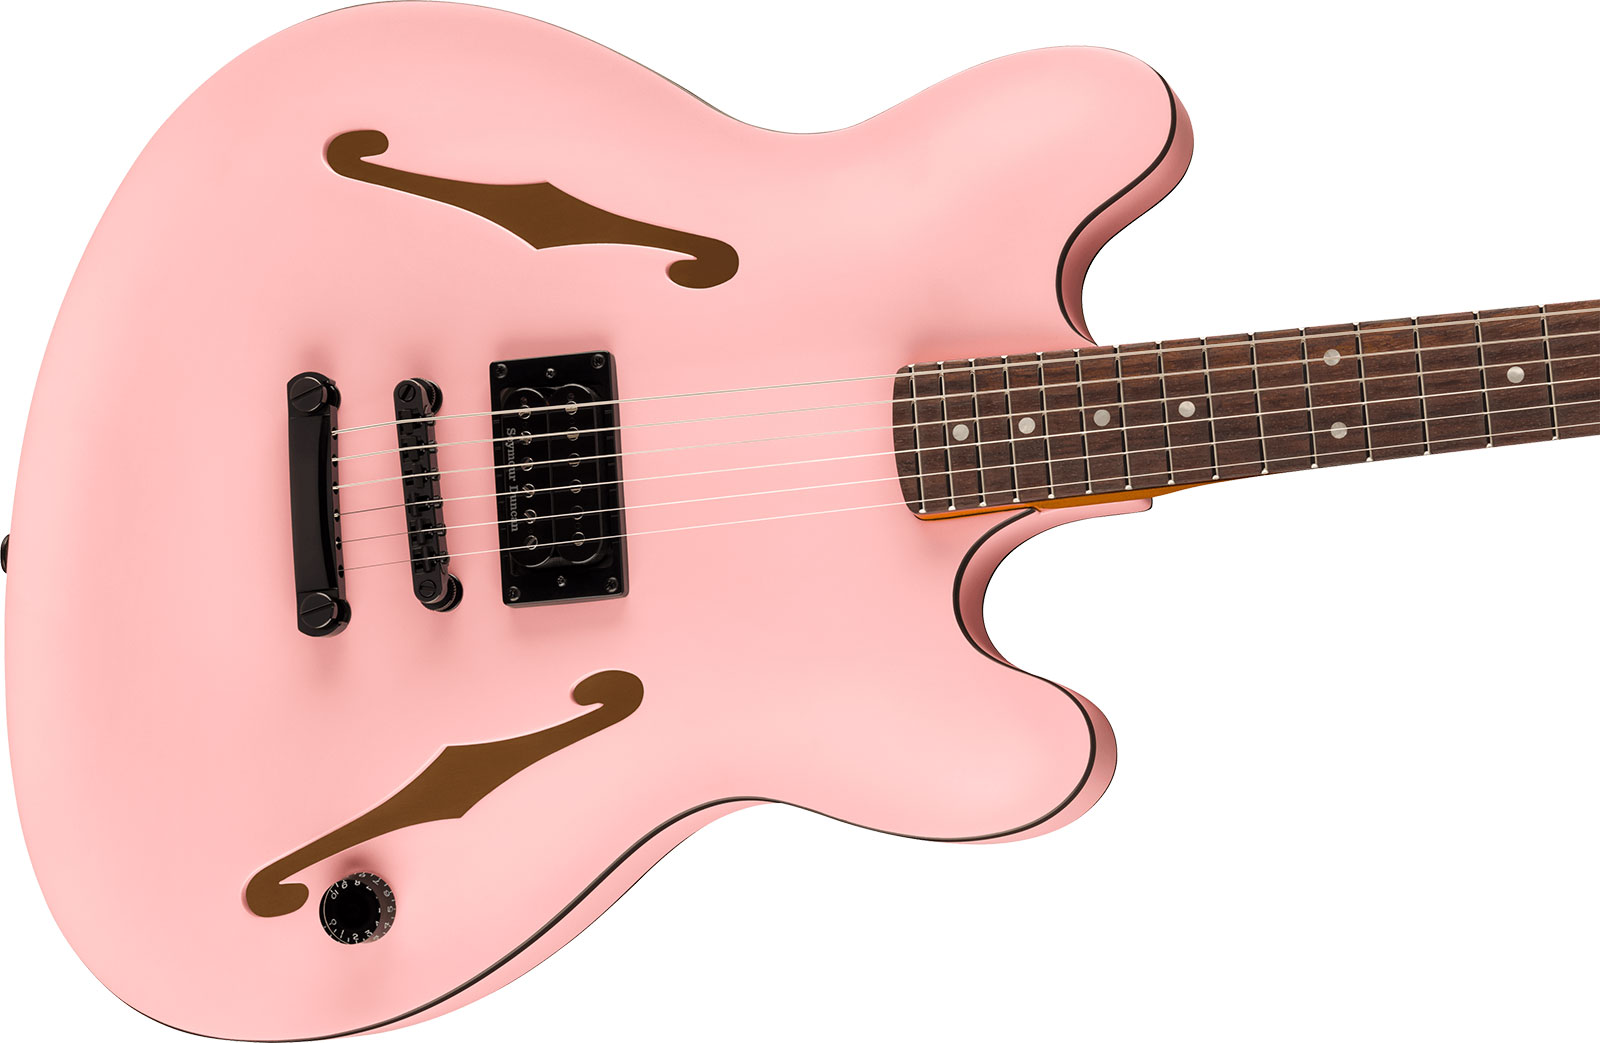 Fender Tom Delonge Starcaster Signature 1h Seymour Duncan Ht Rw - Satin Shell Pink - Semi hollow elektriche gitaar - Variation 2